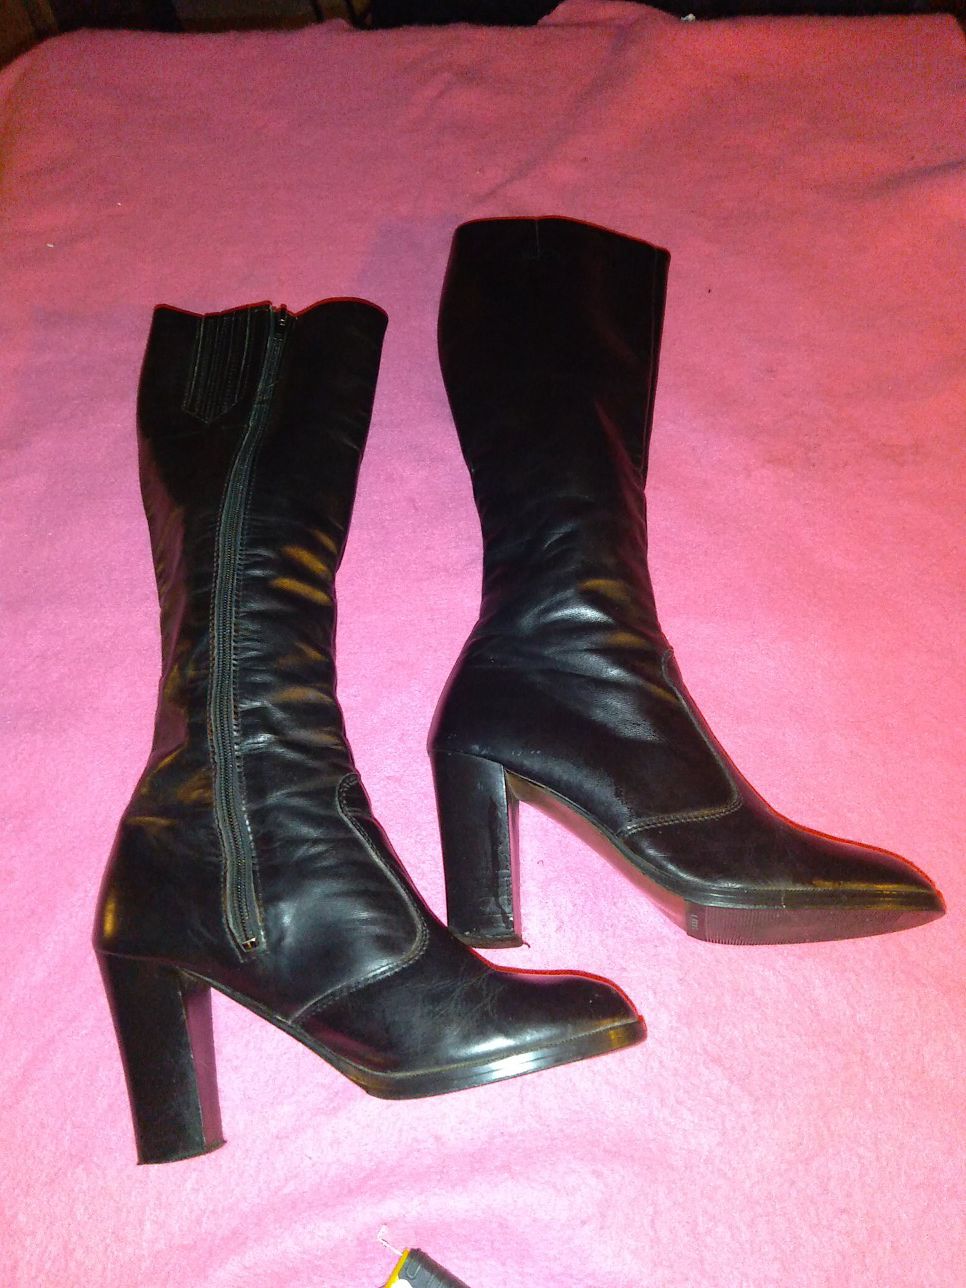 7-1/2 Italian leather boots